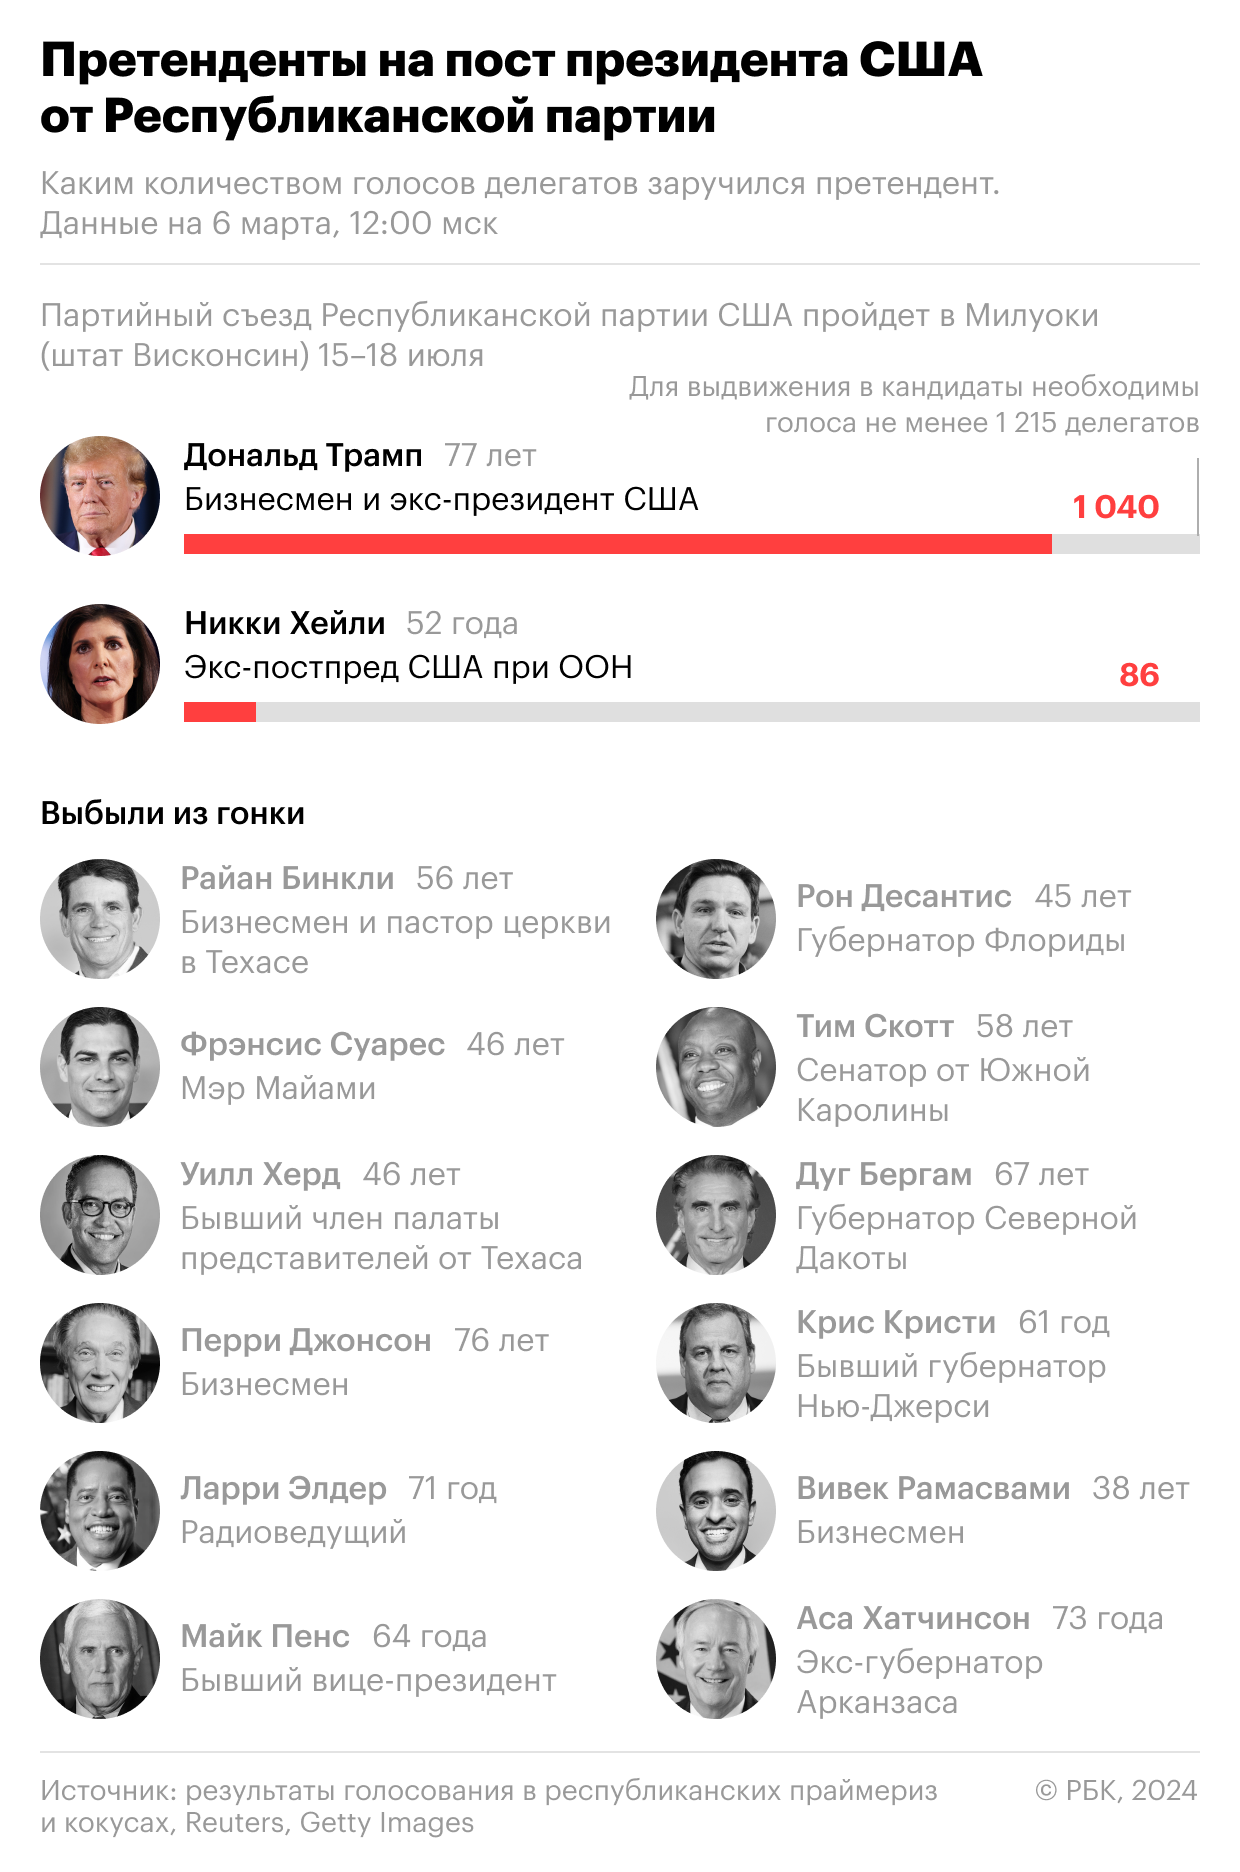 Кто претендует на пост президента США. Инфографика